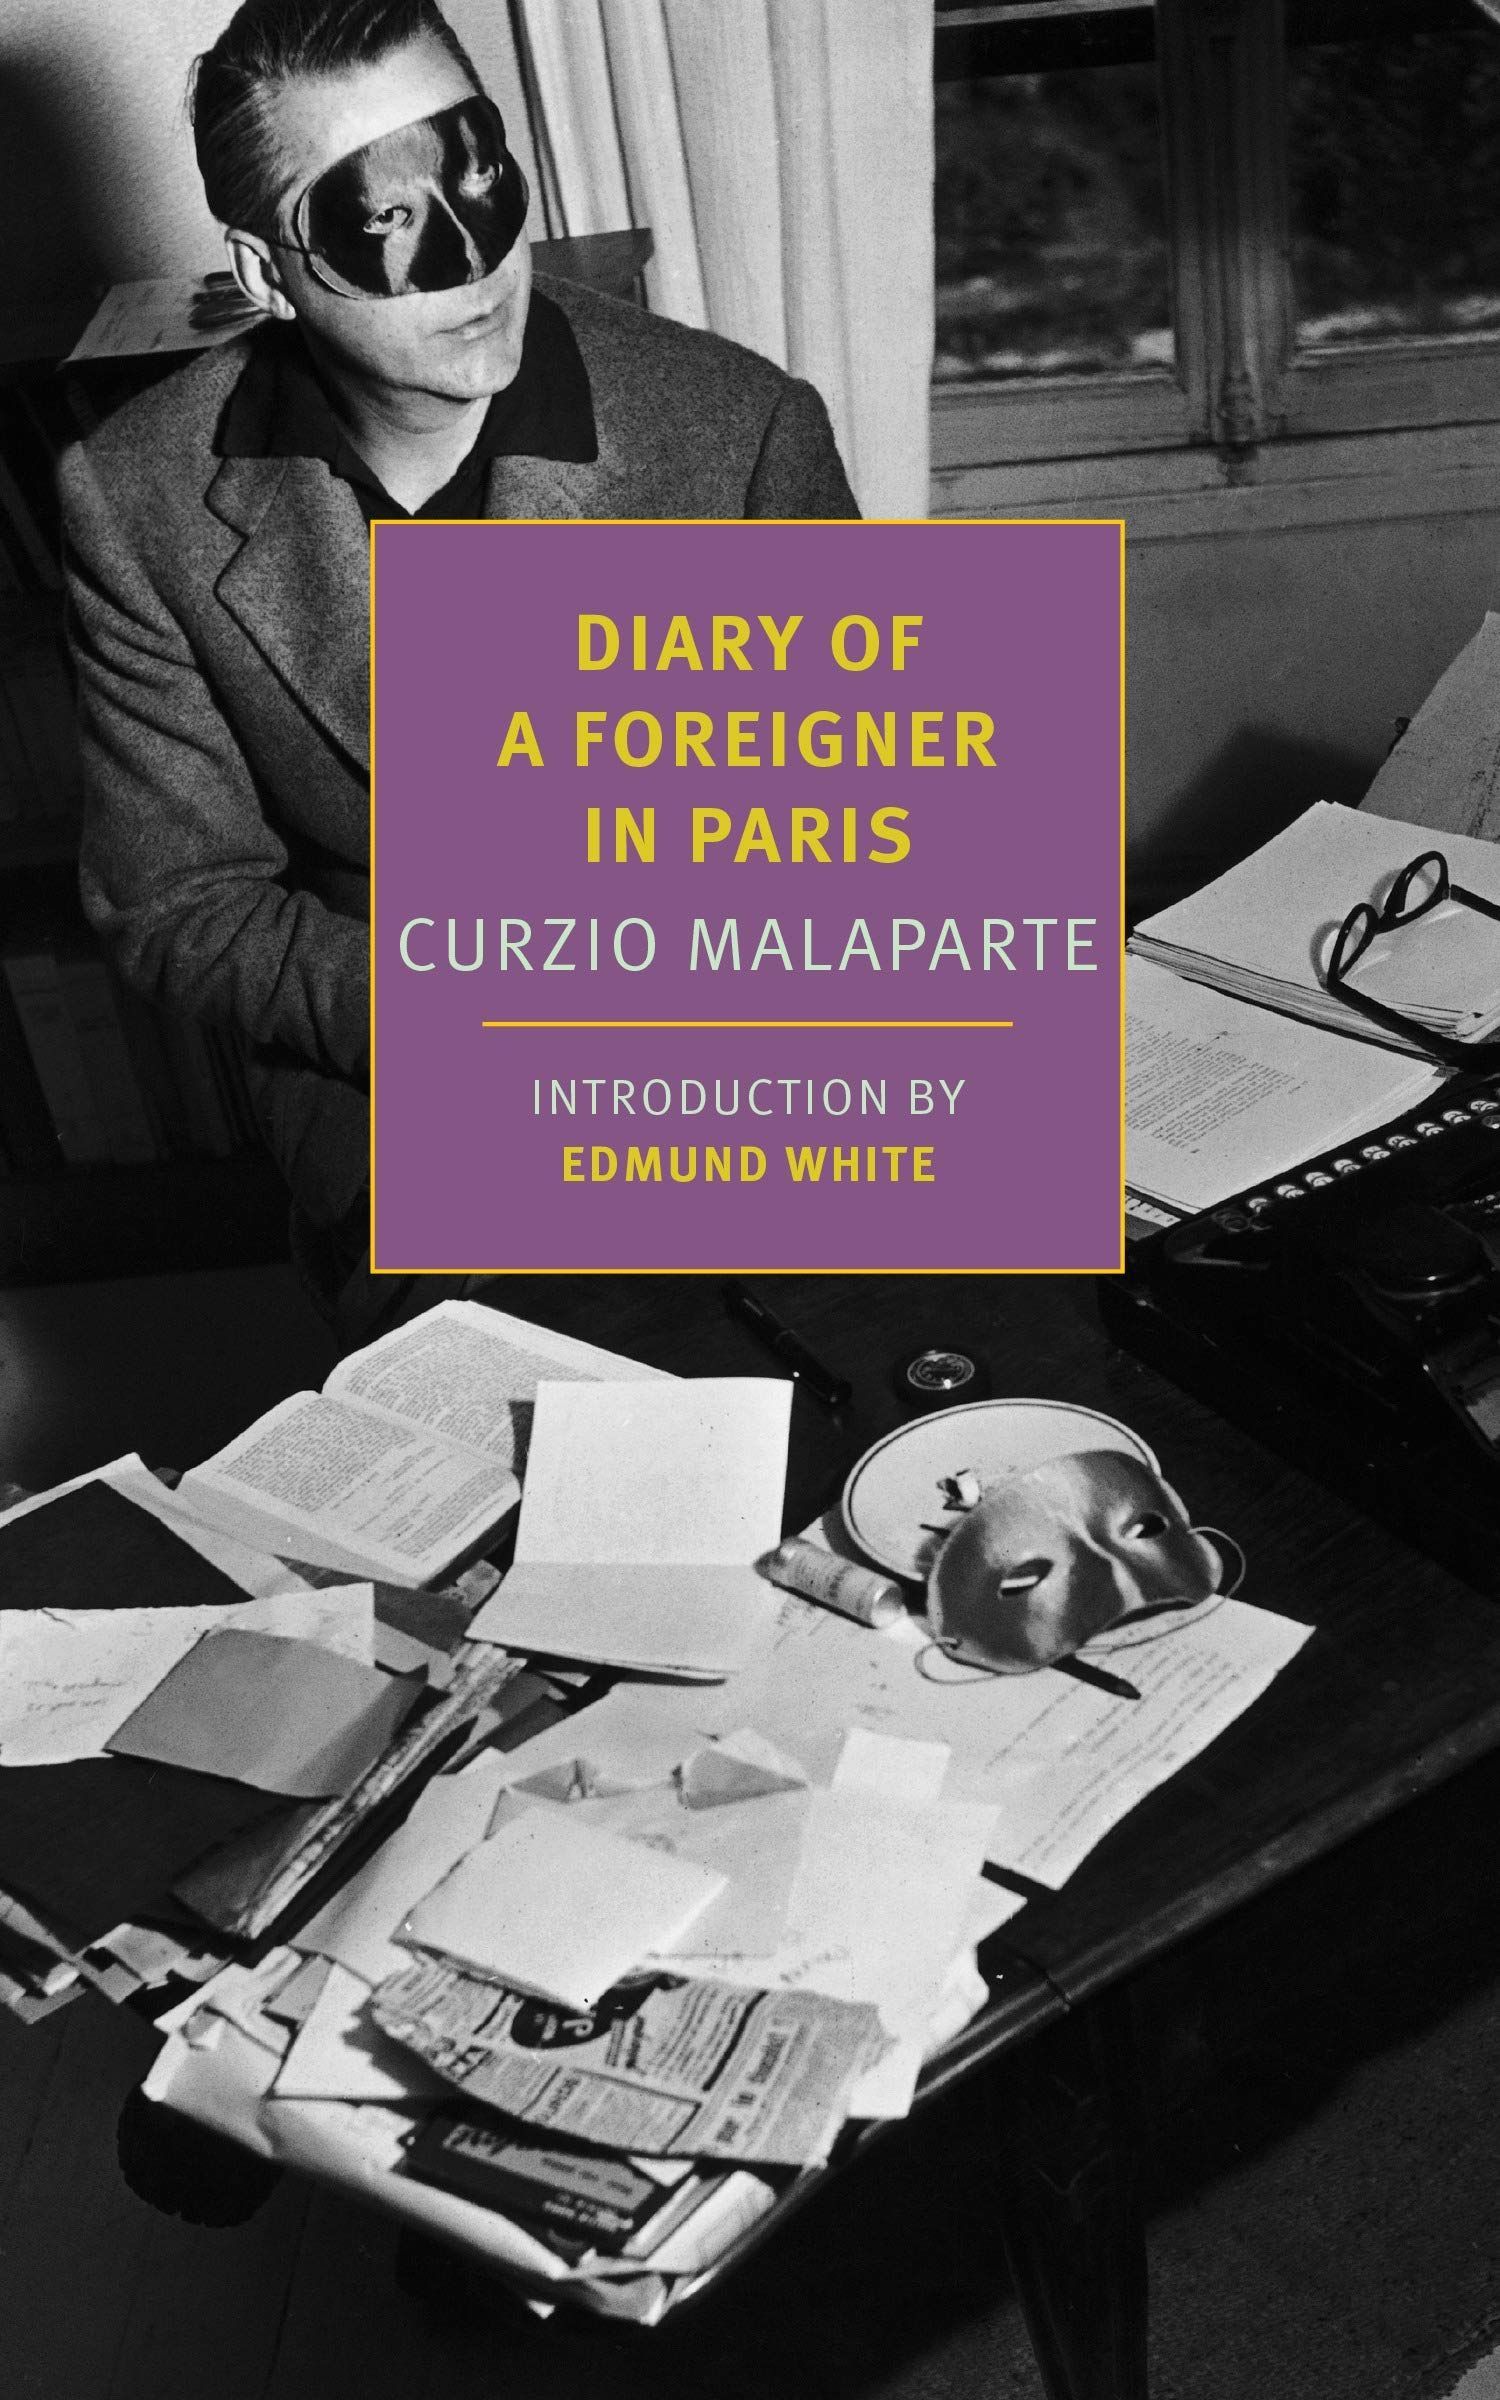 Dog Days in Postwar Paris: On Curzio Malaparte’s “Diary of a Foreigner in Paris”